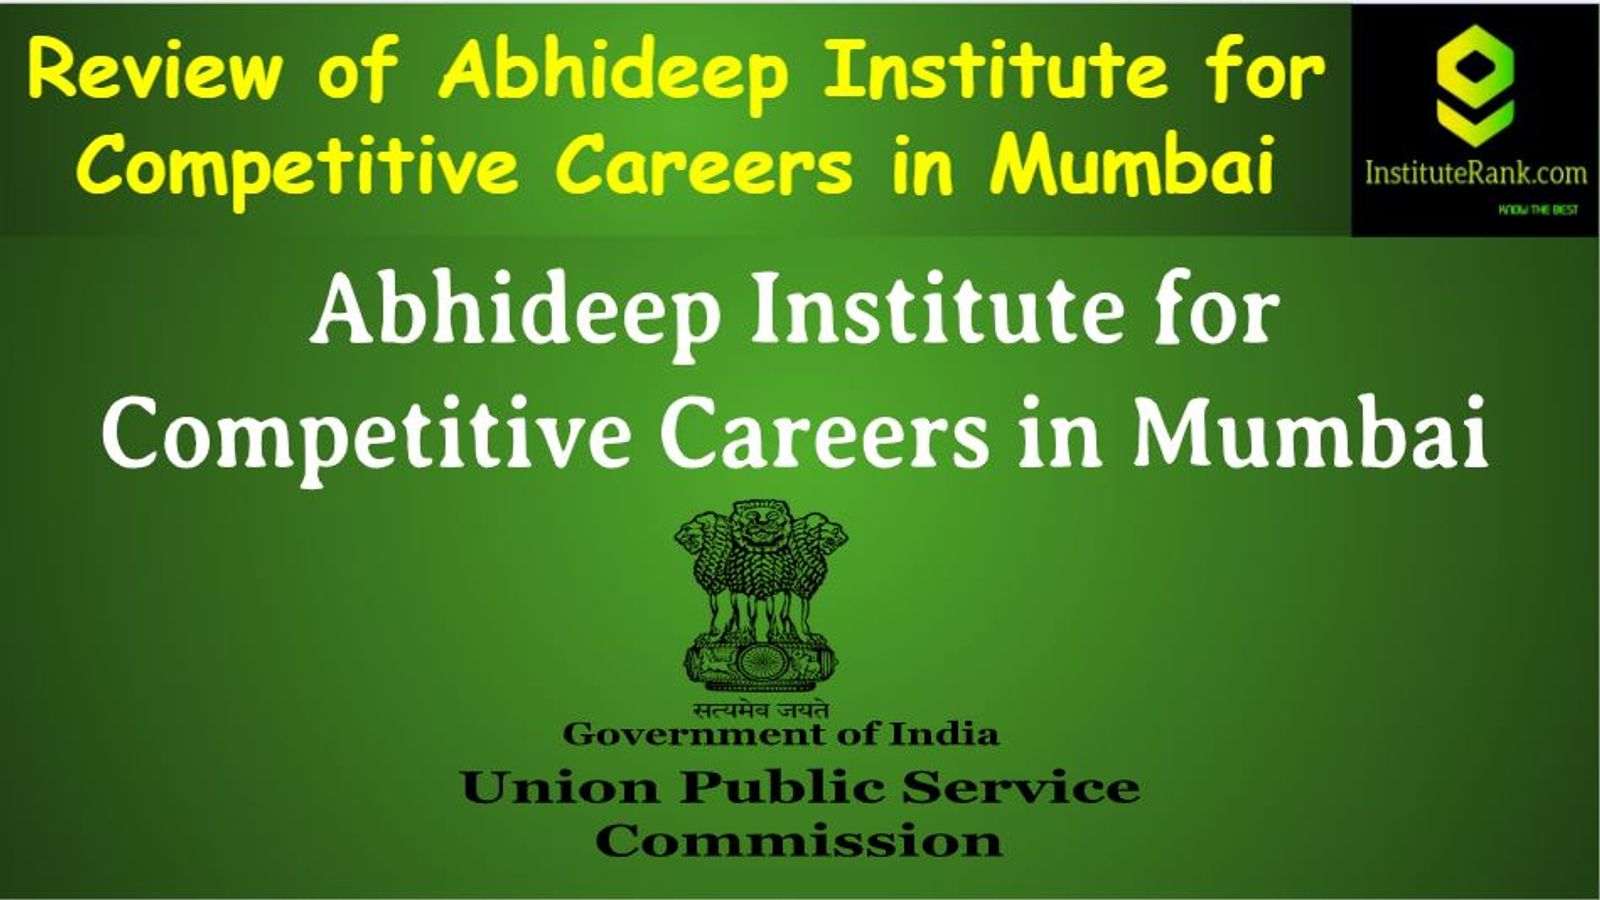 Abhideep Institute For Competitive Careers iAS Coaching Mumbai Reviews